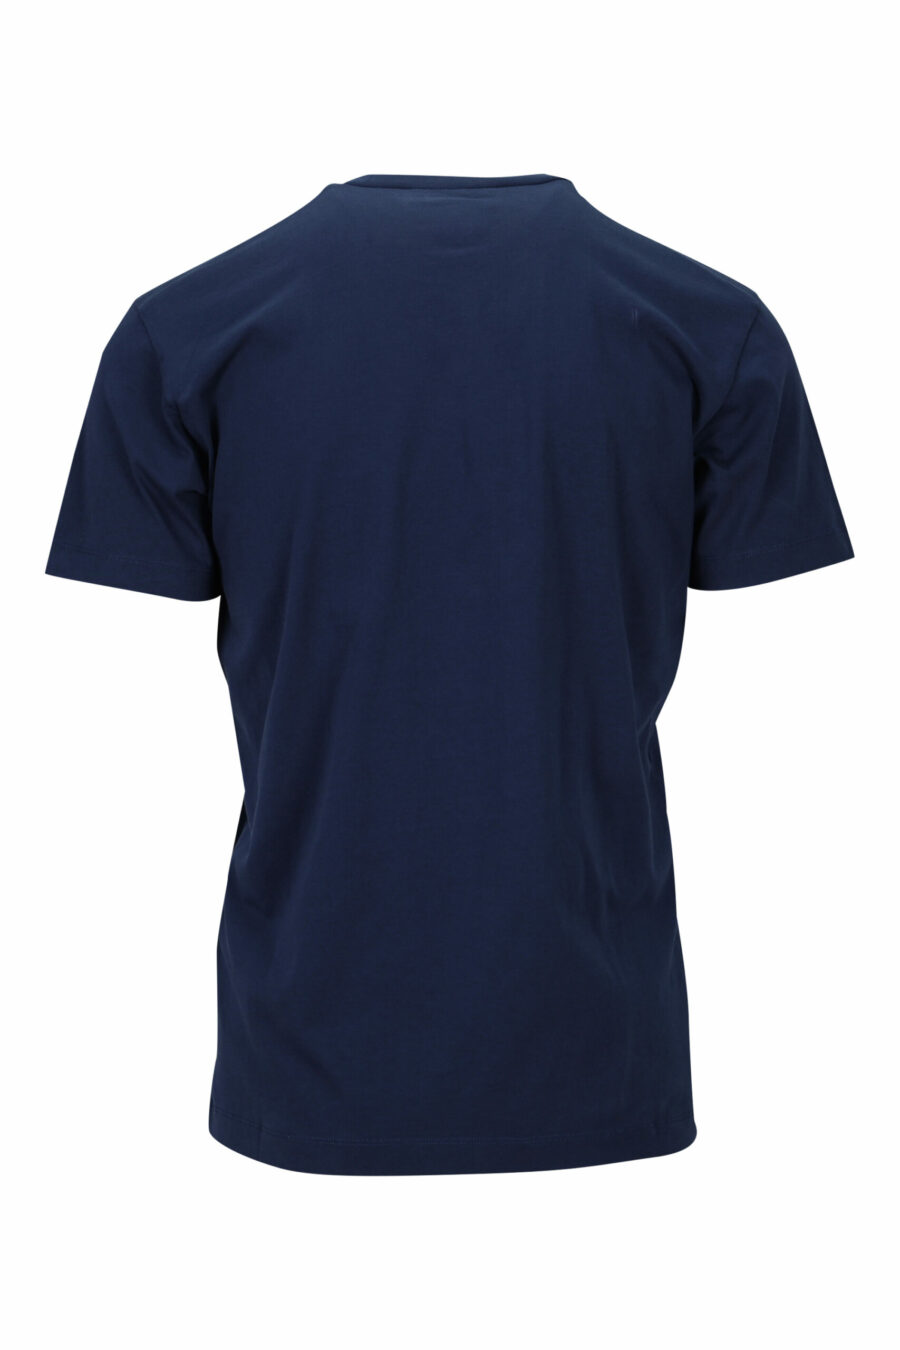 T-shirt azul escura com o maxilogo "ceresio 9, milano" - 8054148504915 1 scaled